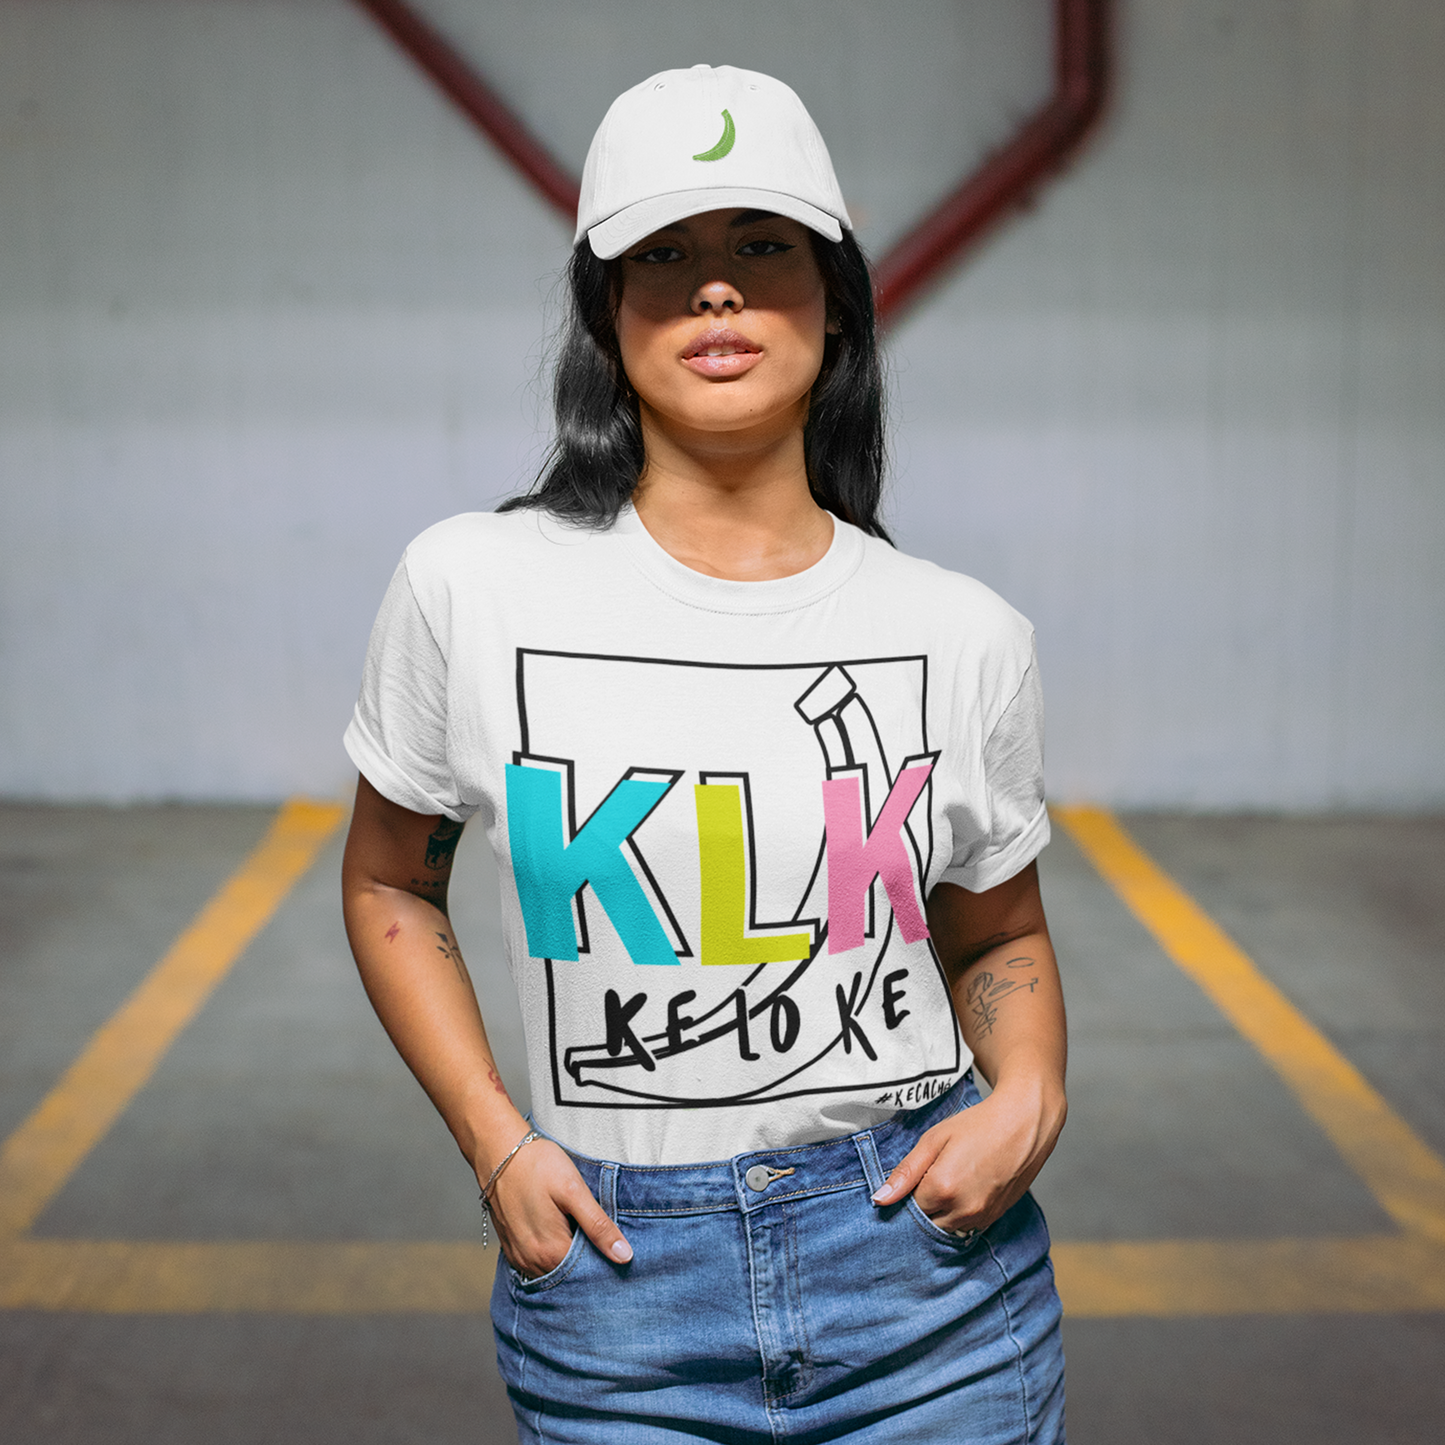 KeCaché | KLK Bright Dominican T-shirt